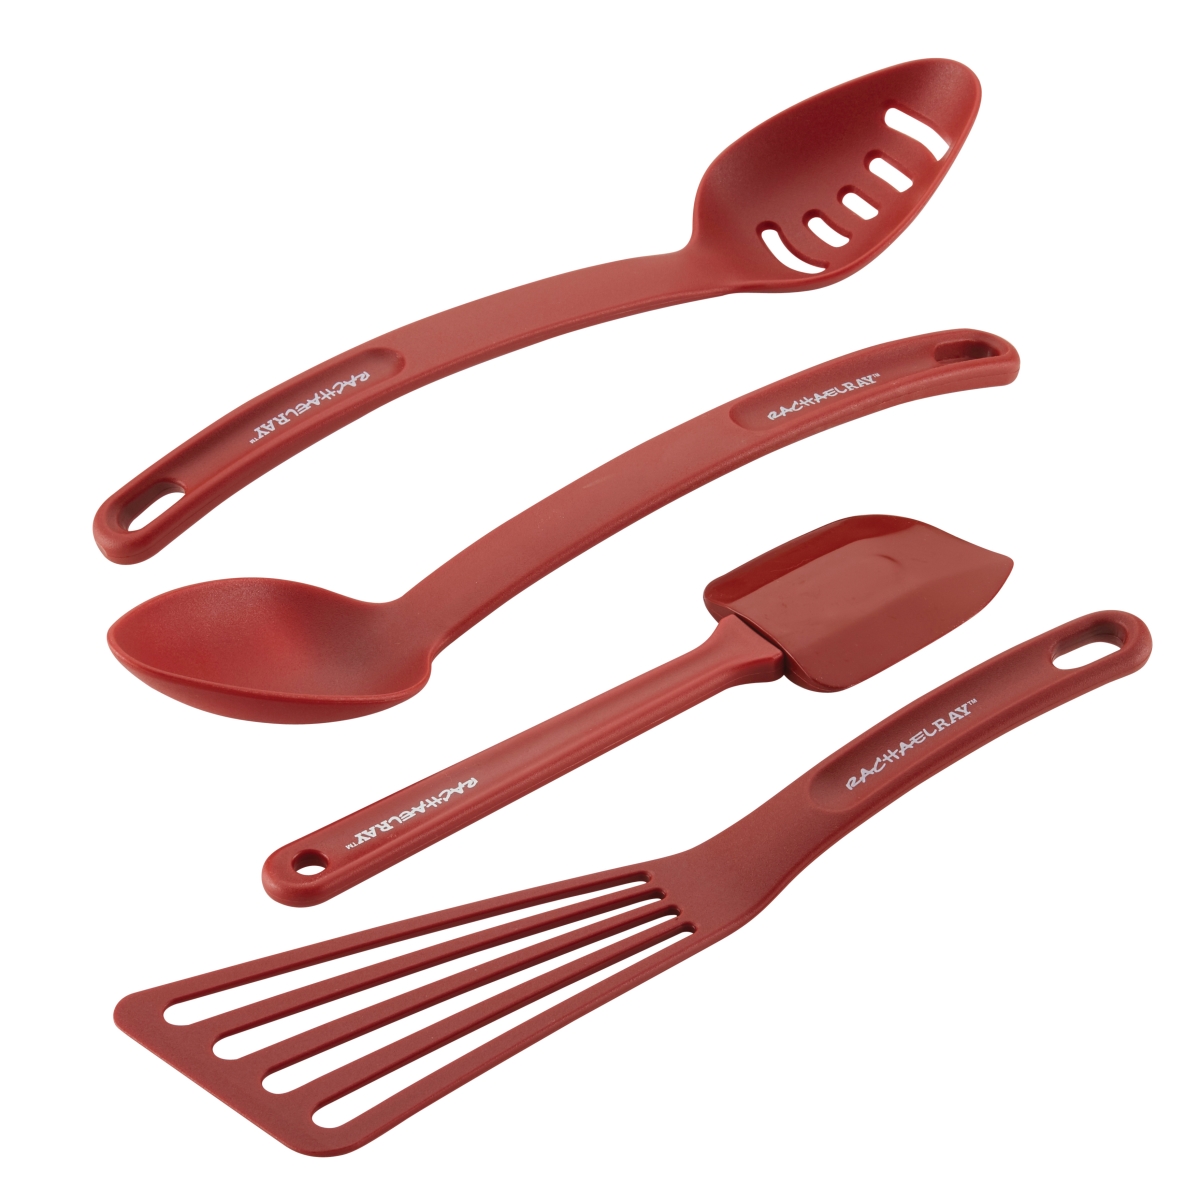 47565 Cucina Nylon Nonstick Tools Set, Cranberry Red - 4 Piece